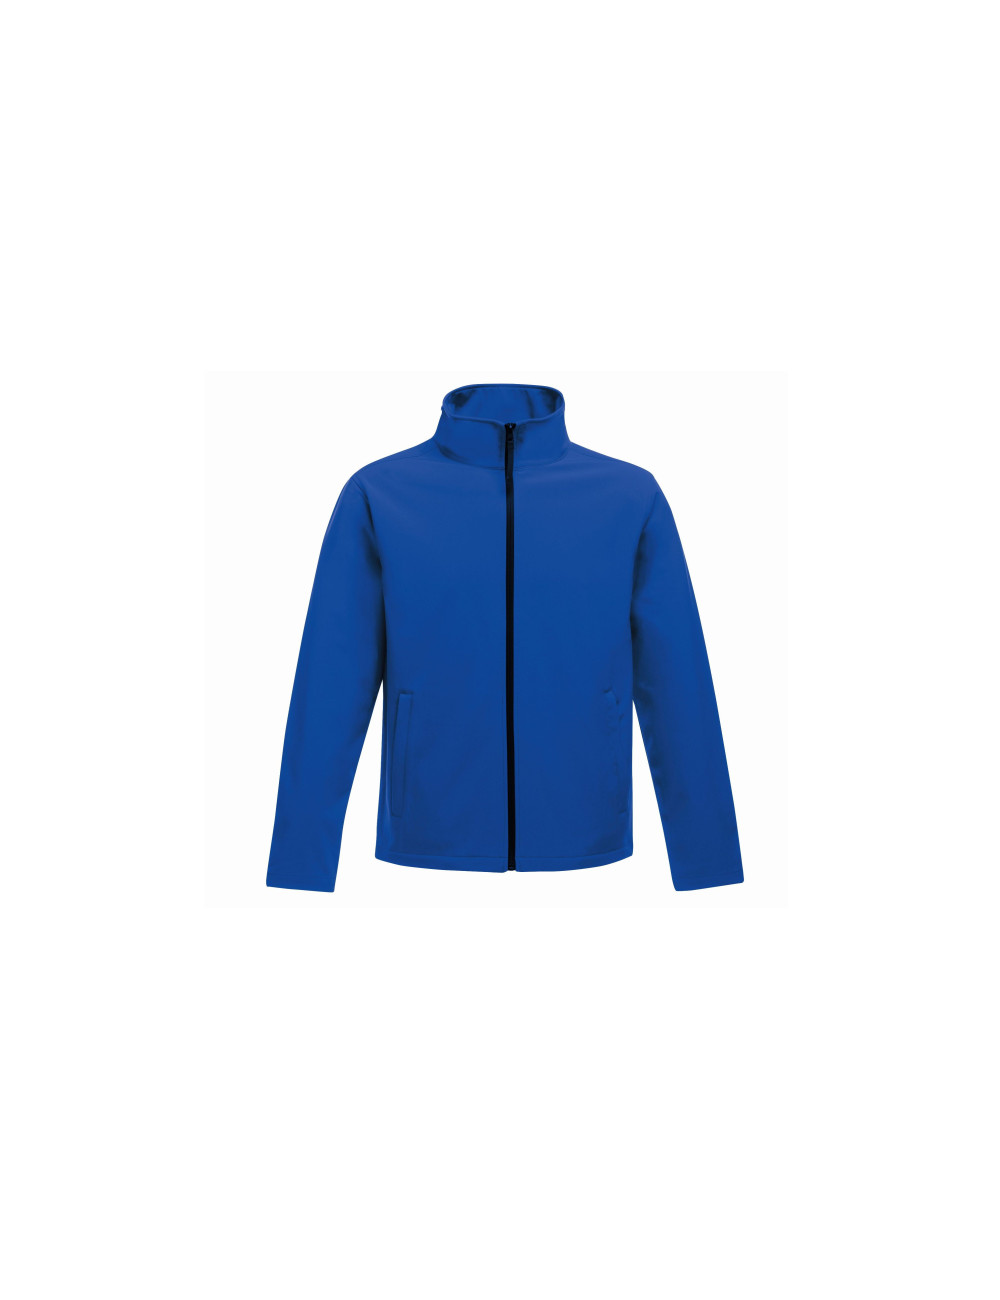 Regatta RGA628 - Softshell jacket Men  Colors:New Royal/Black 